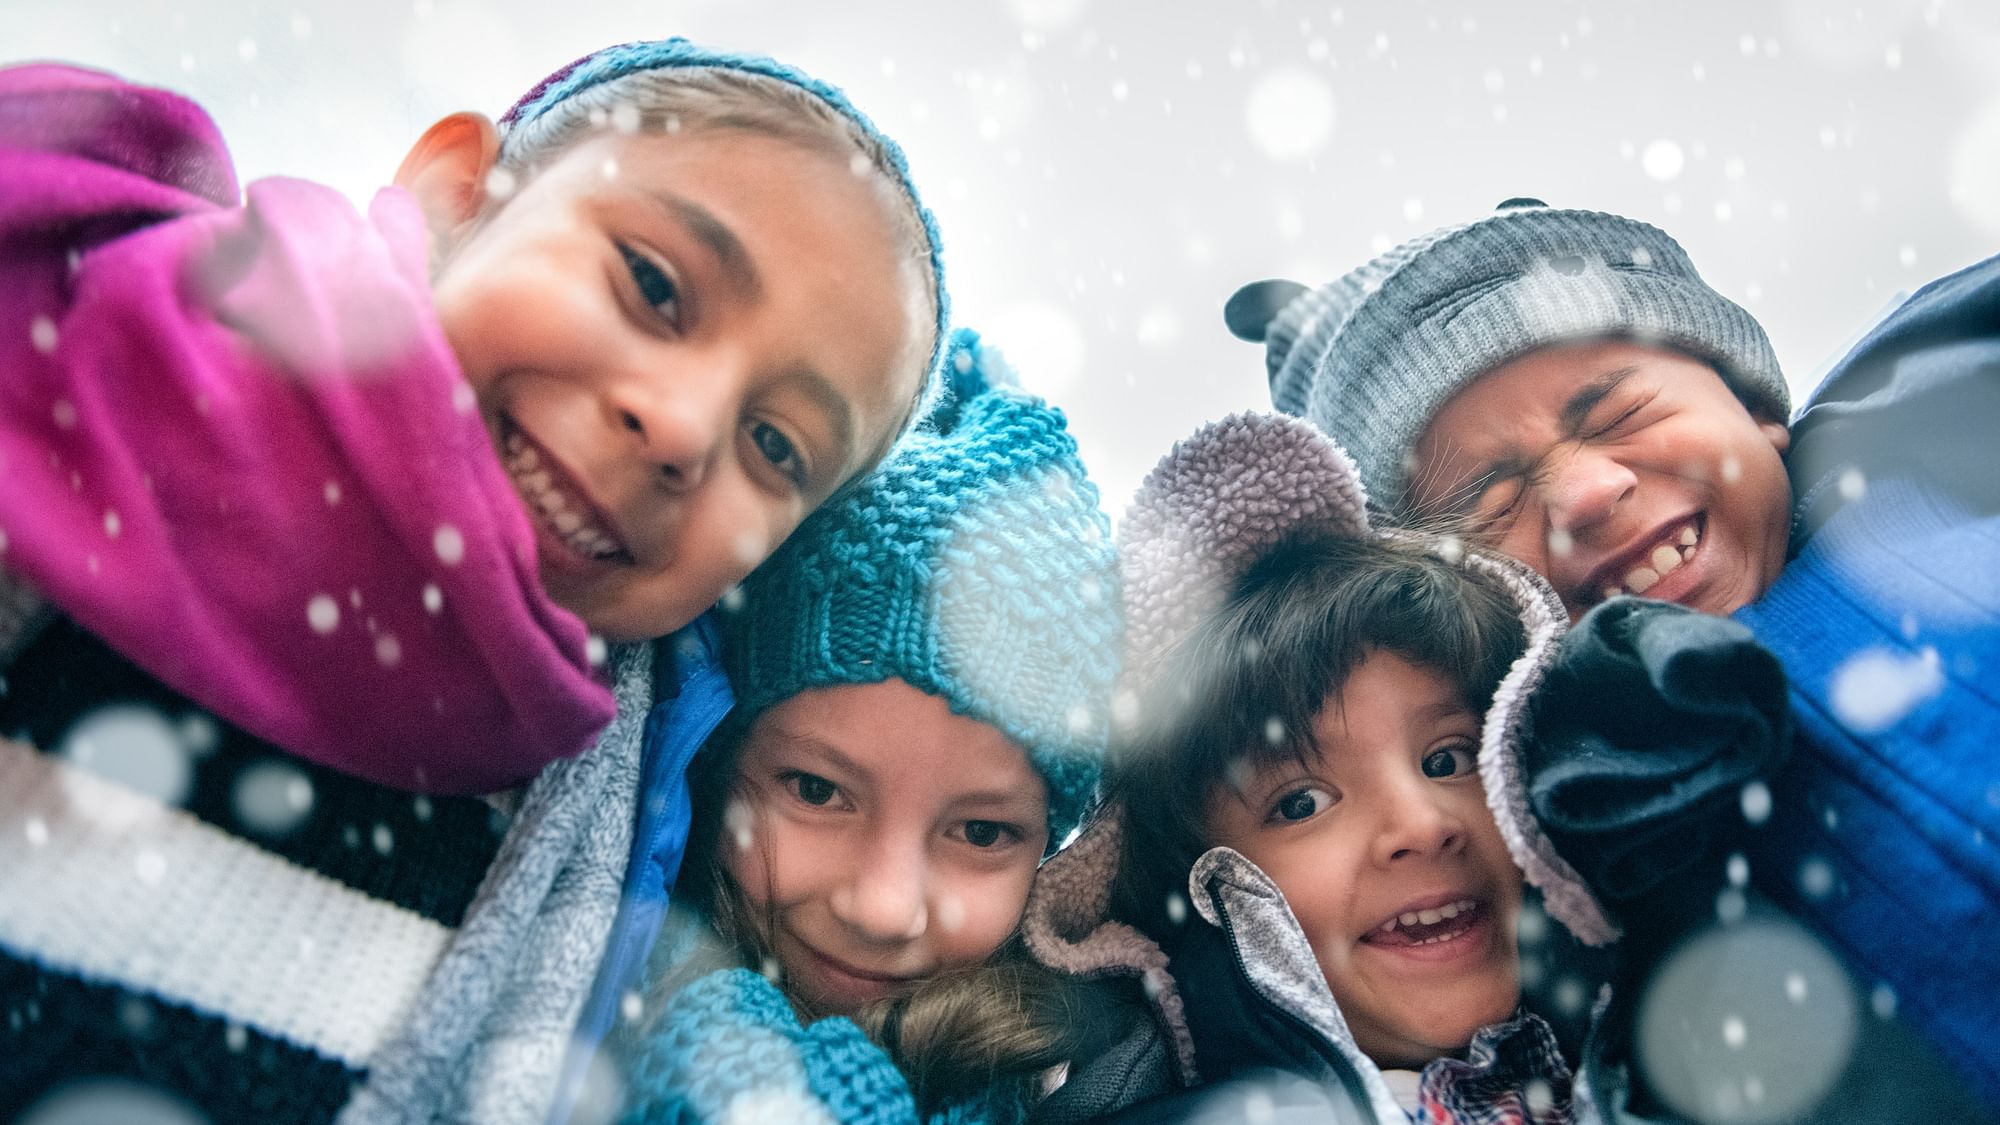 <div class="paragraphs"><p>Winter Care Tips For Children: ठंड के मौसम में बच्चों को कैसे हेल्दी रखें?</p></div>